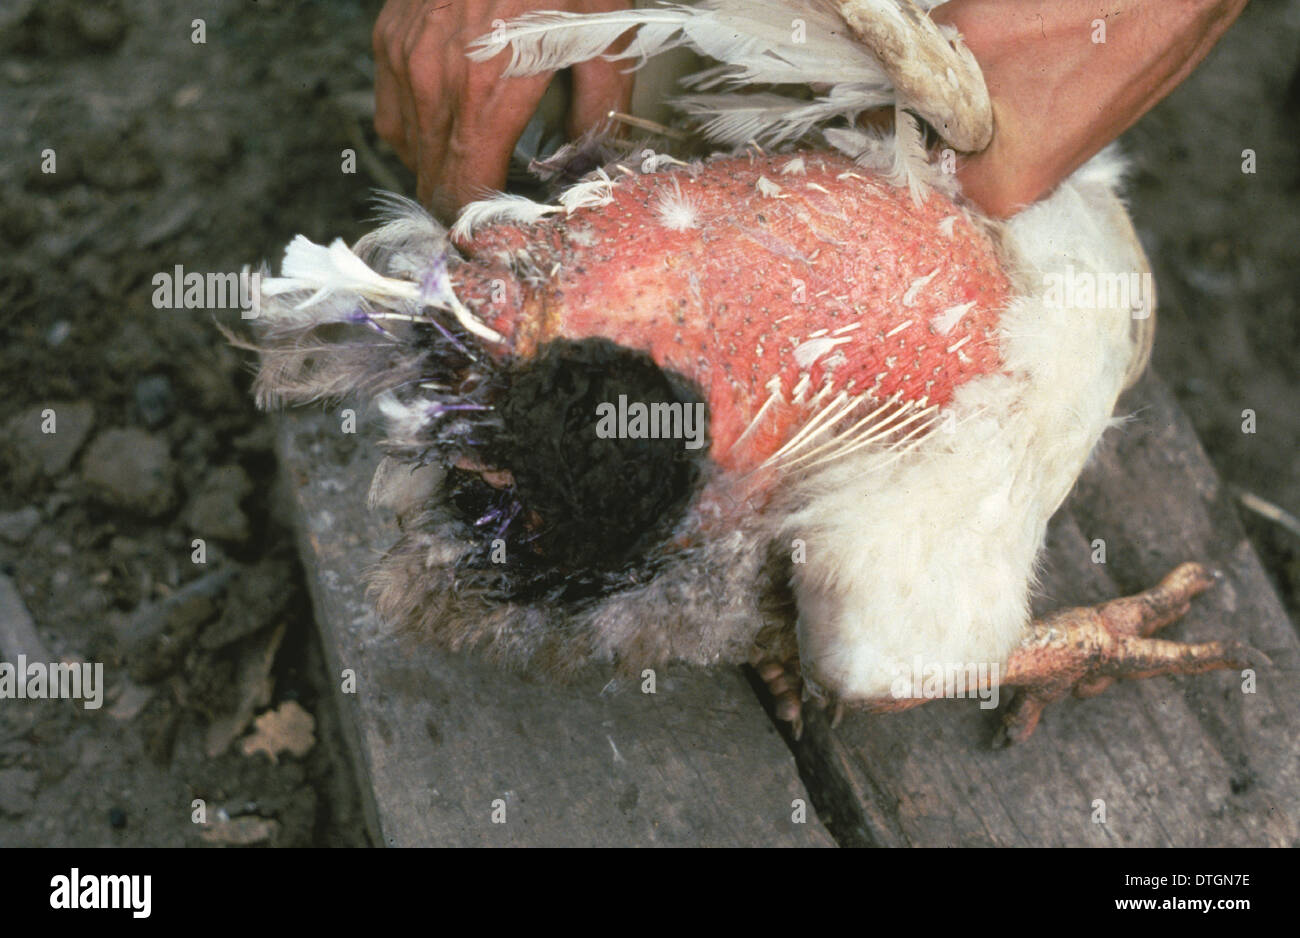 Chicken with screwworm infestation Stock Photo